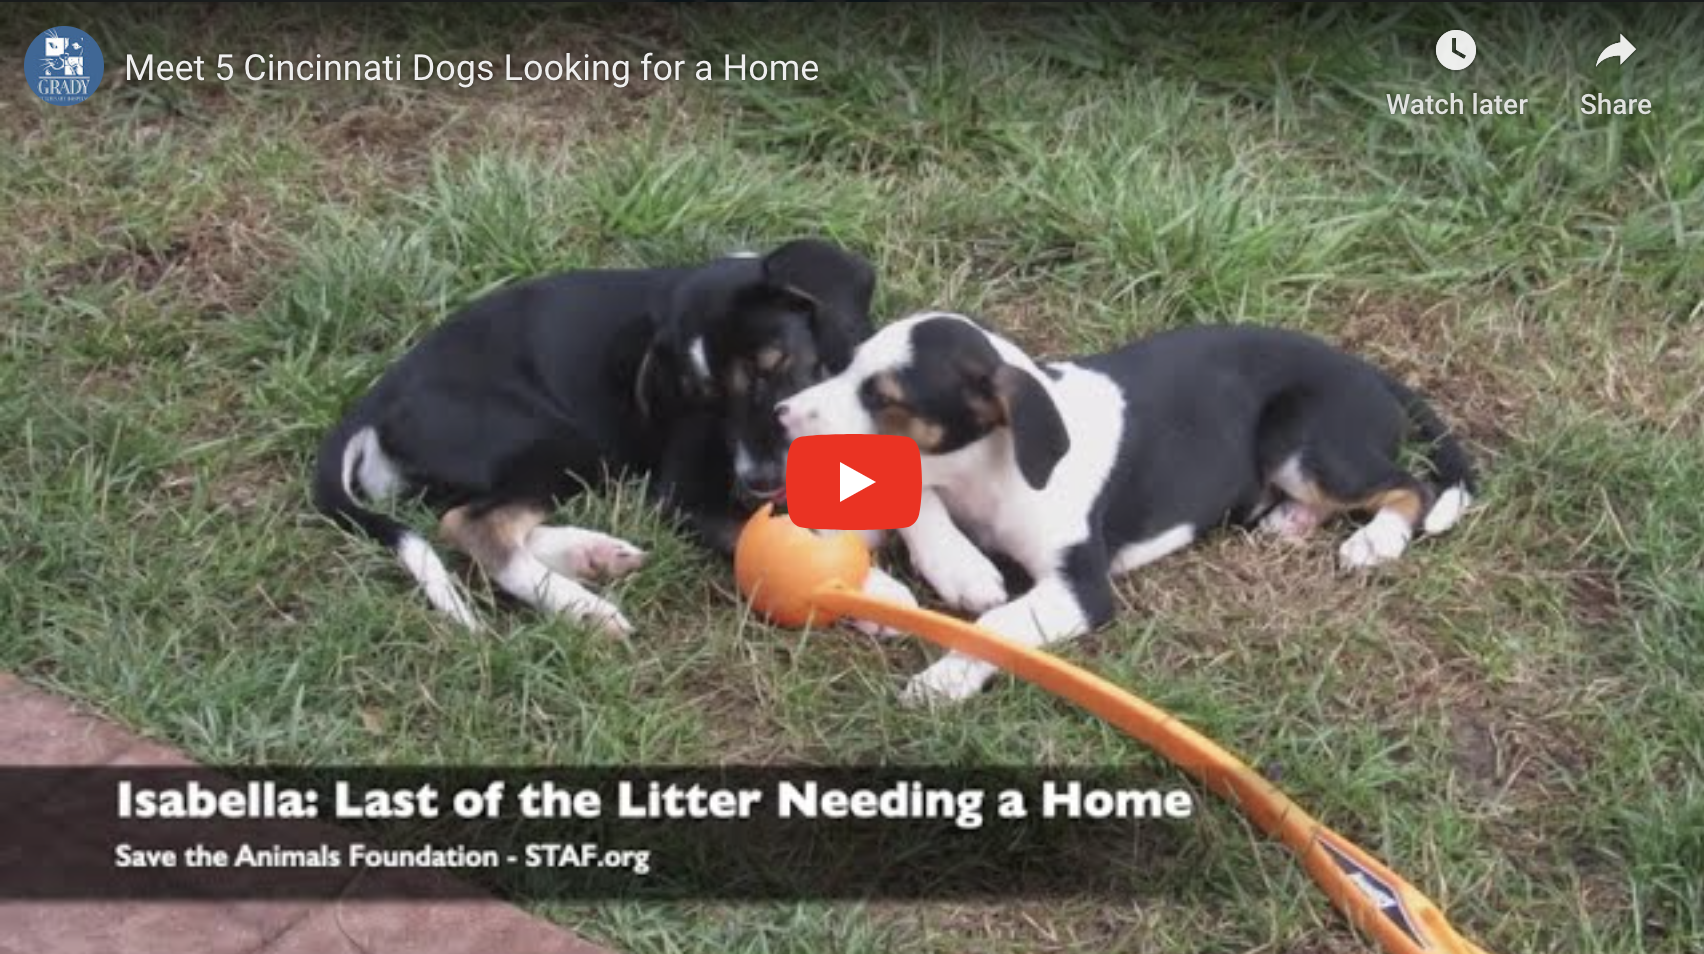 Meet 5 Cincinnati Dogs Looking for a Home